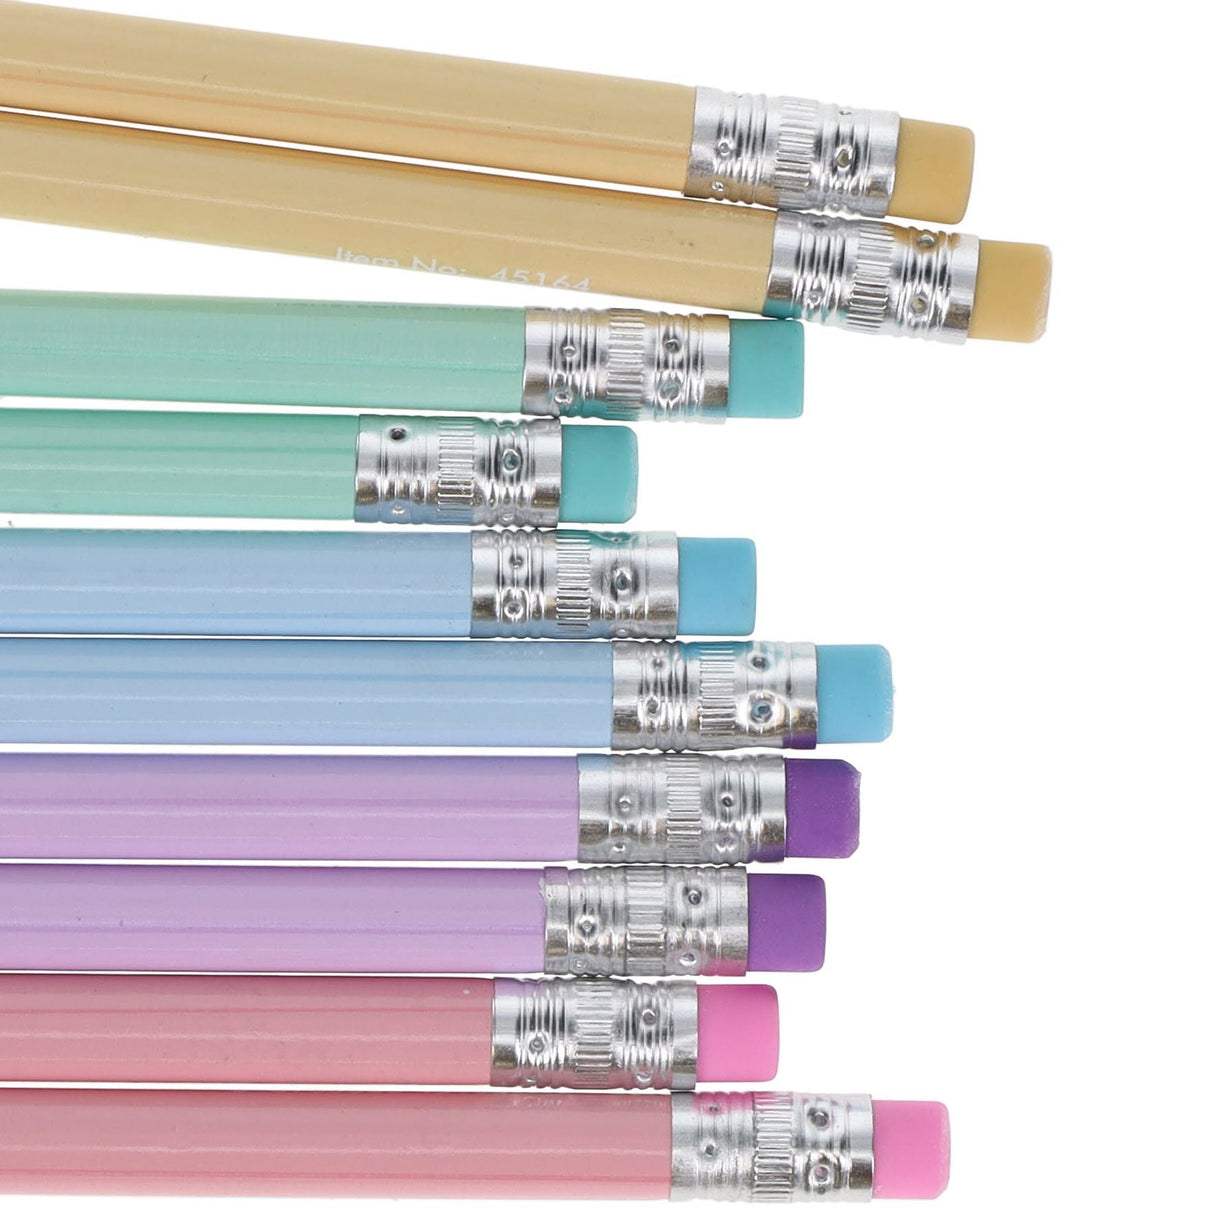 Premto Pastel HB Pencils With Eraser - Tub of 100-Pencils- Buy Online at Stationery Shop UK